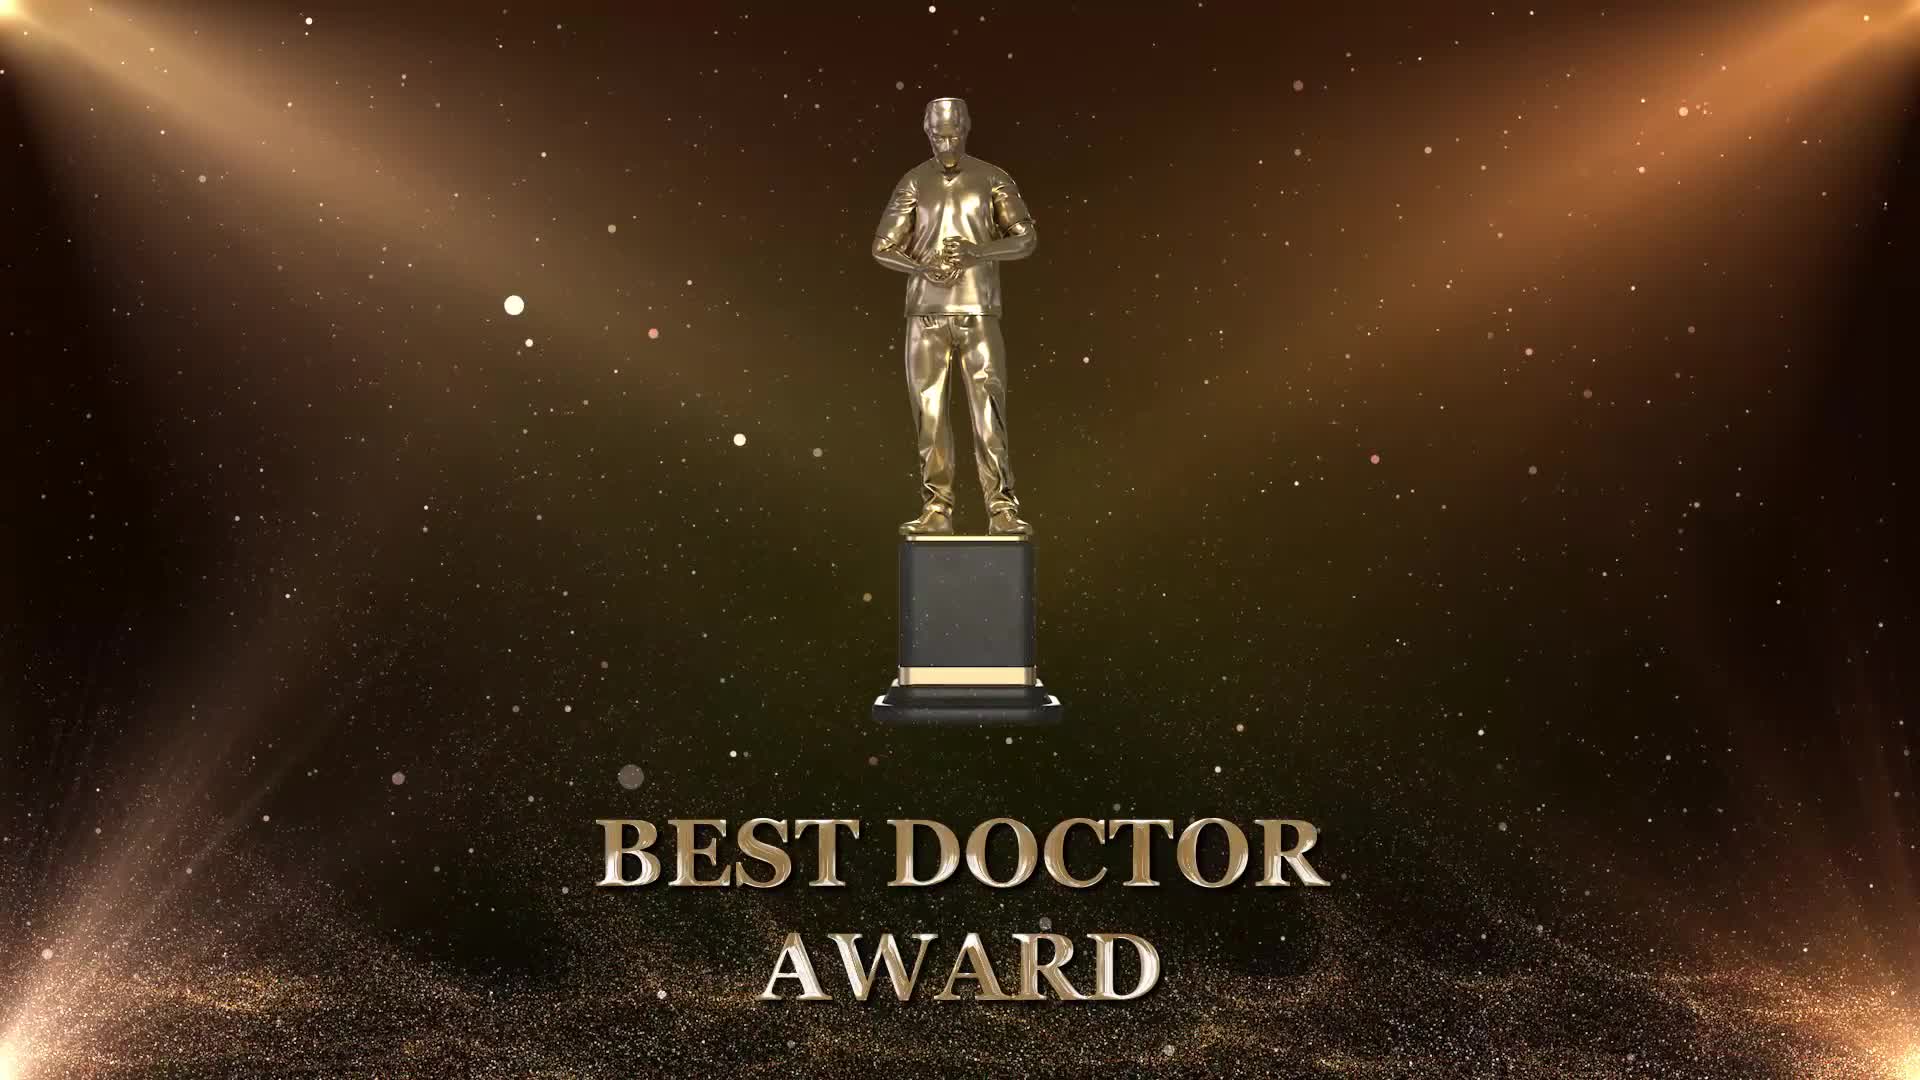  Best Doctor Award 